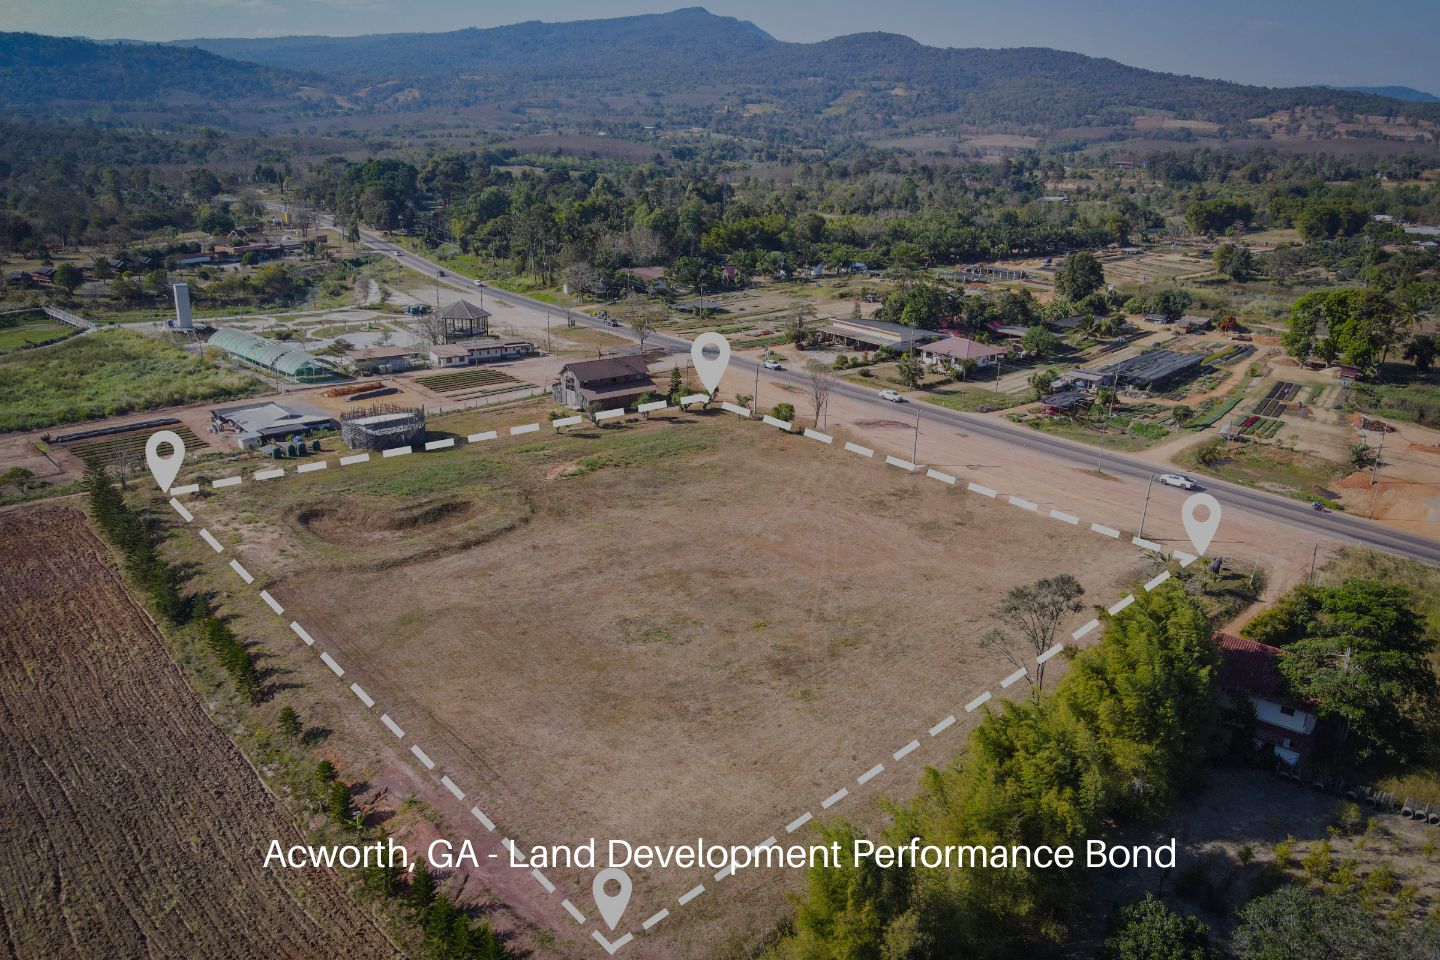 Acworth, GA - Land Development Performance Bond - Land plot for building house aerial view.